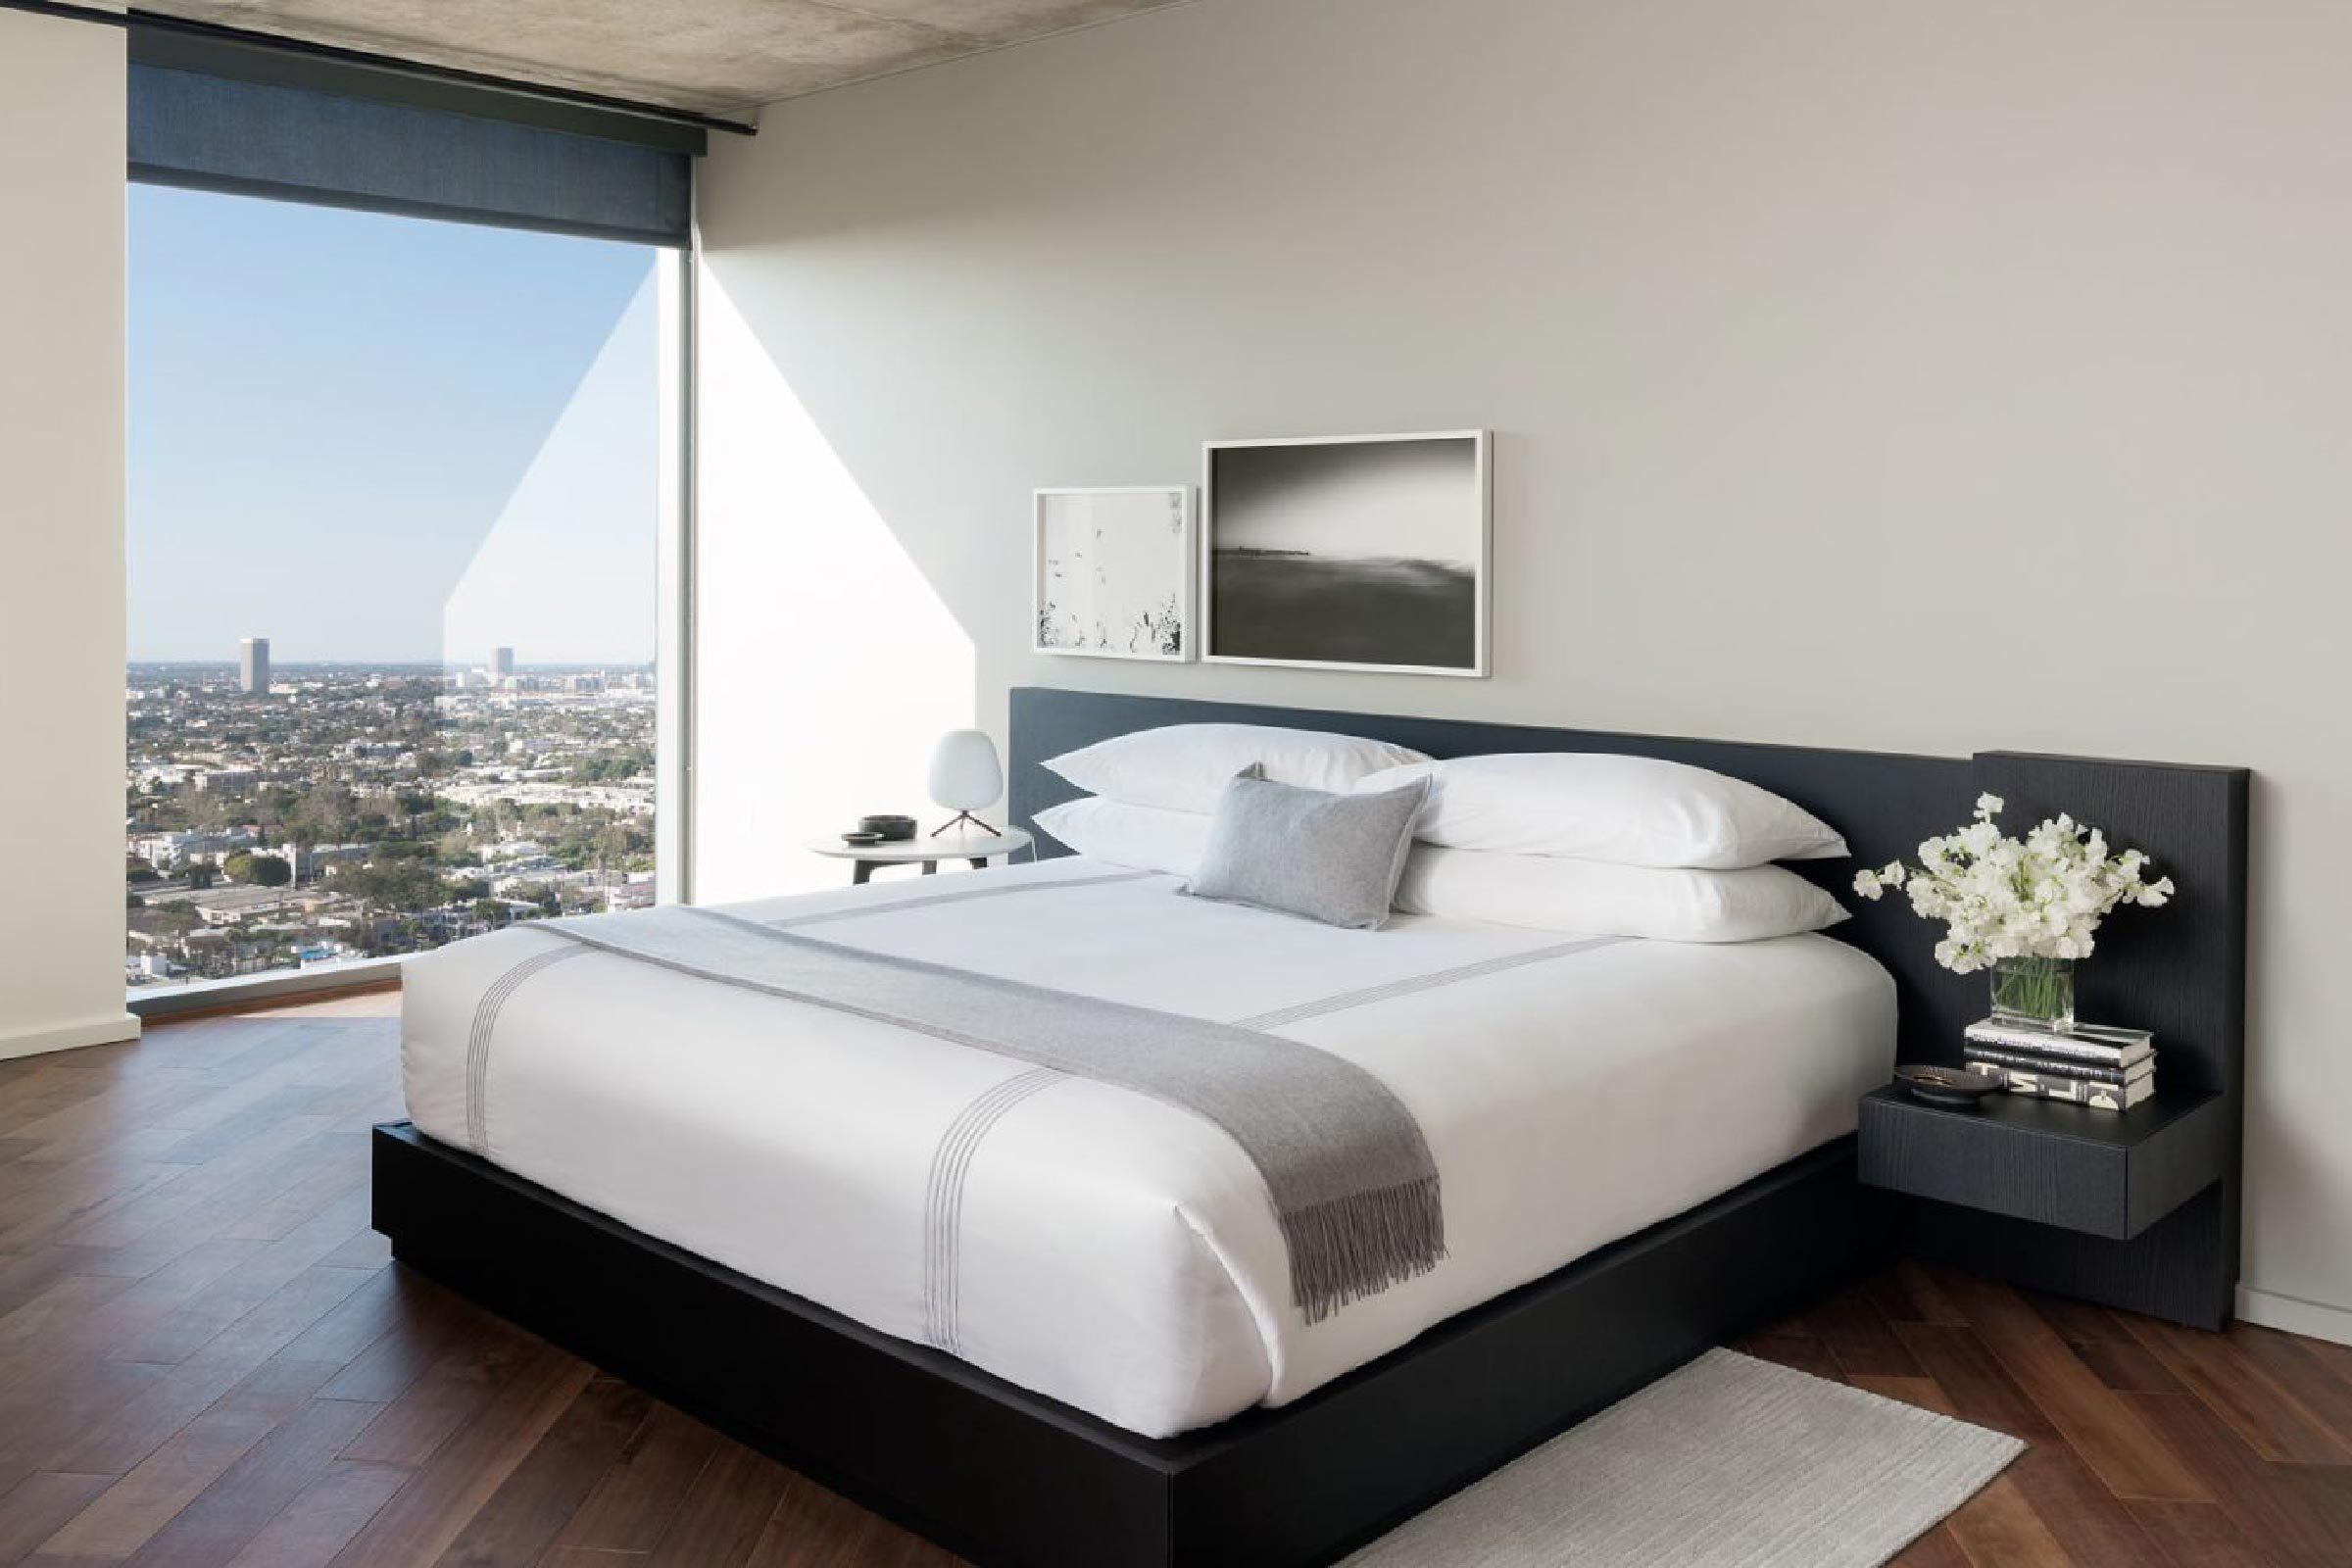 hotel bed mattress size